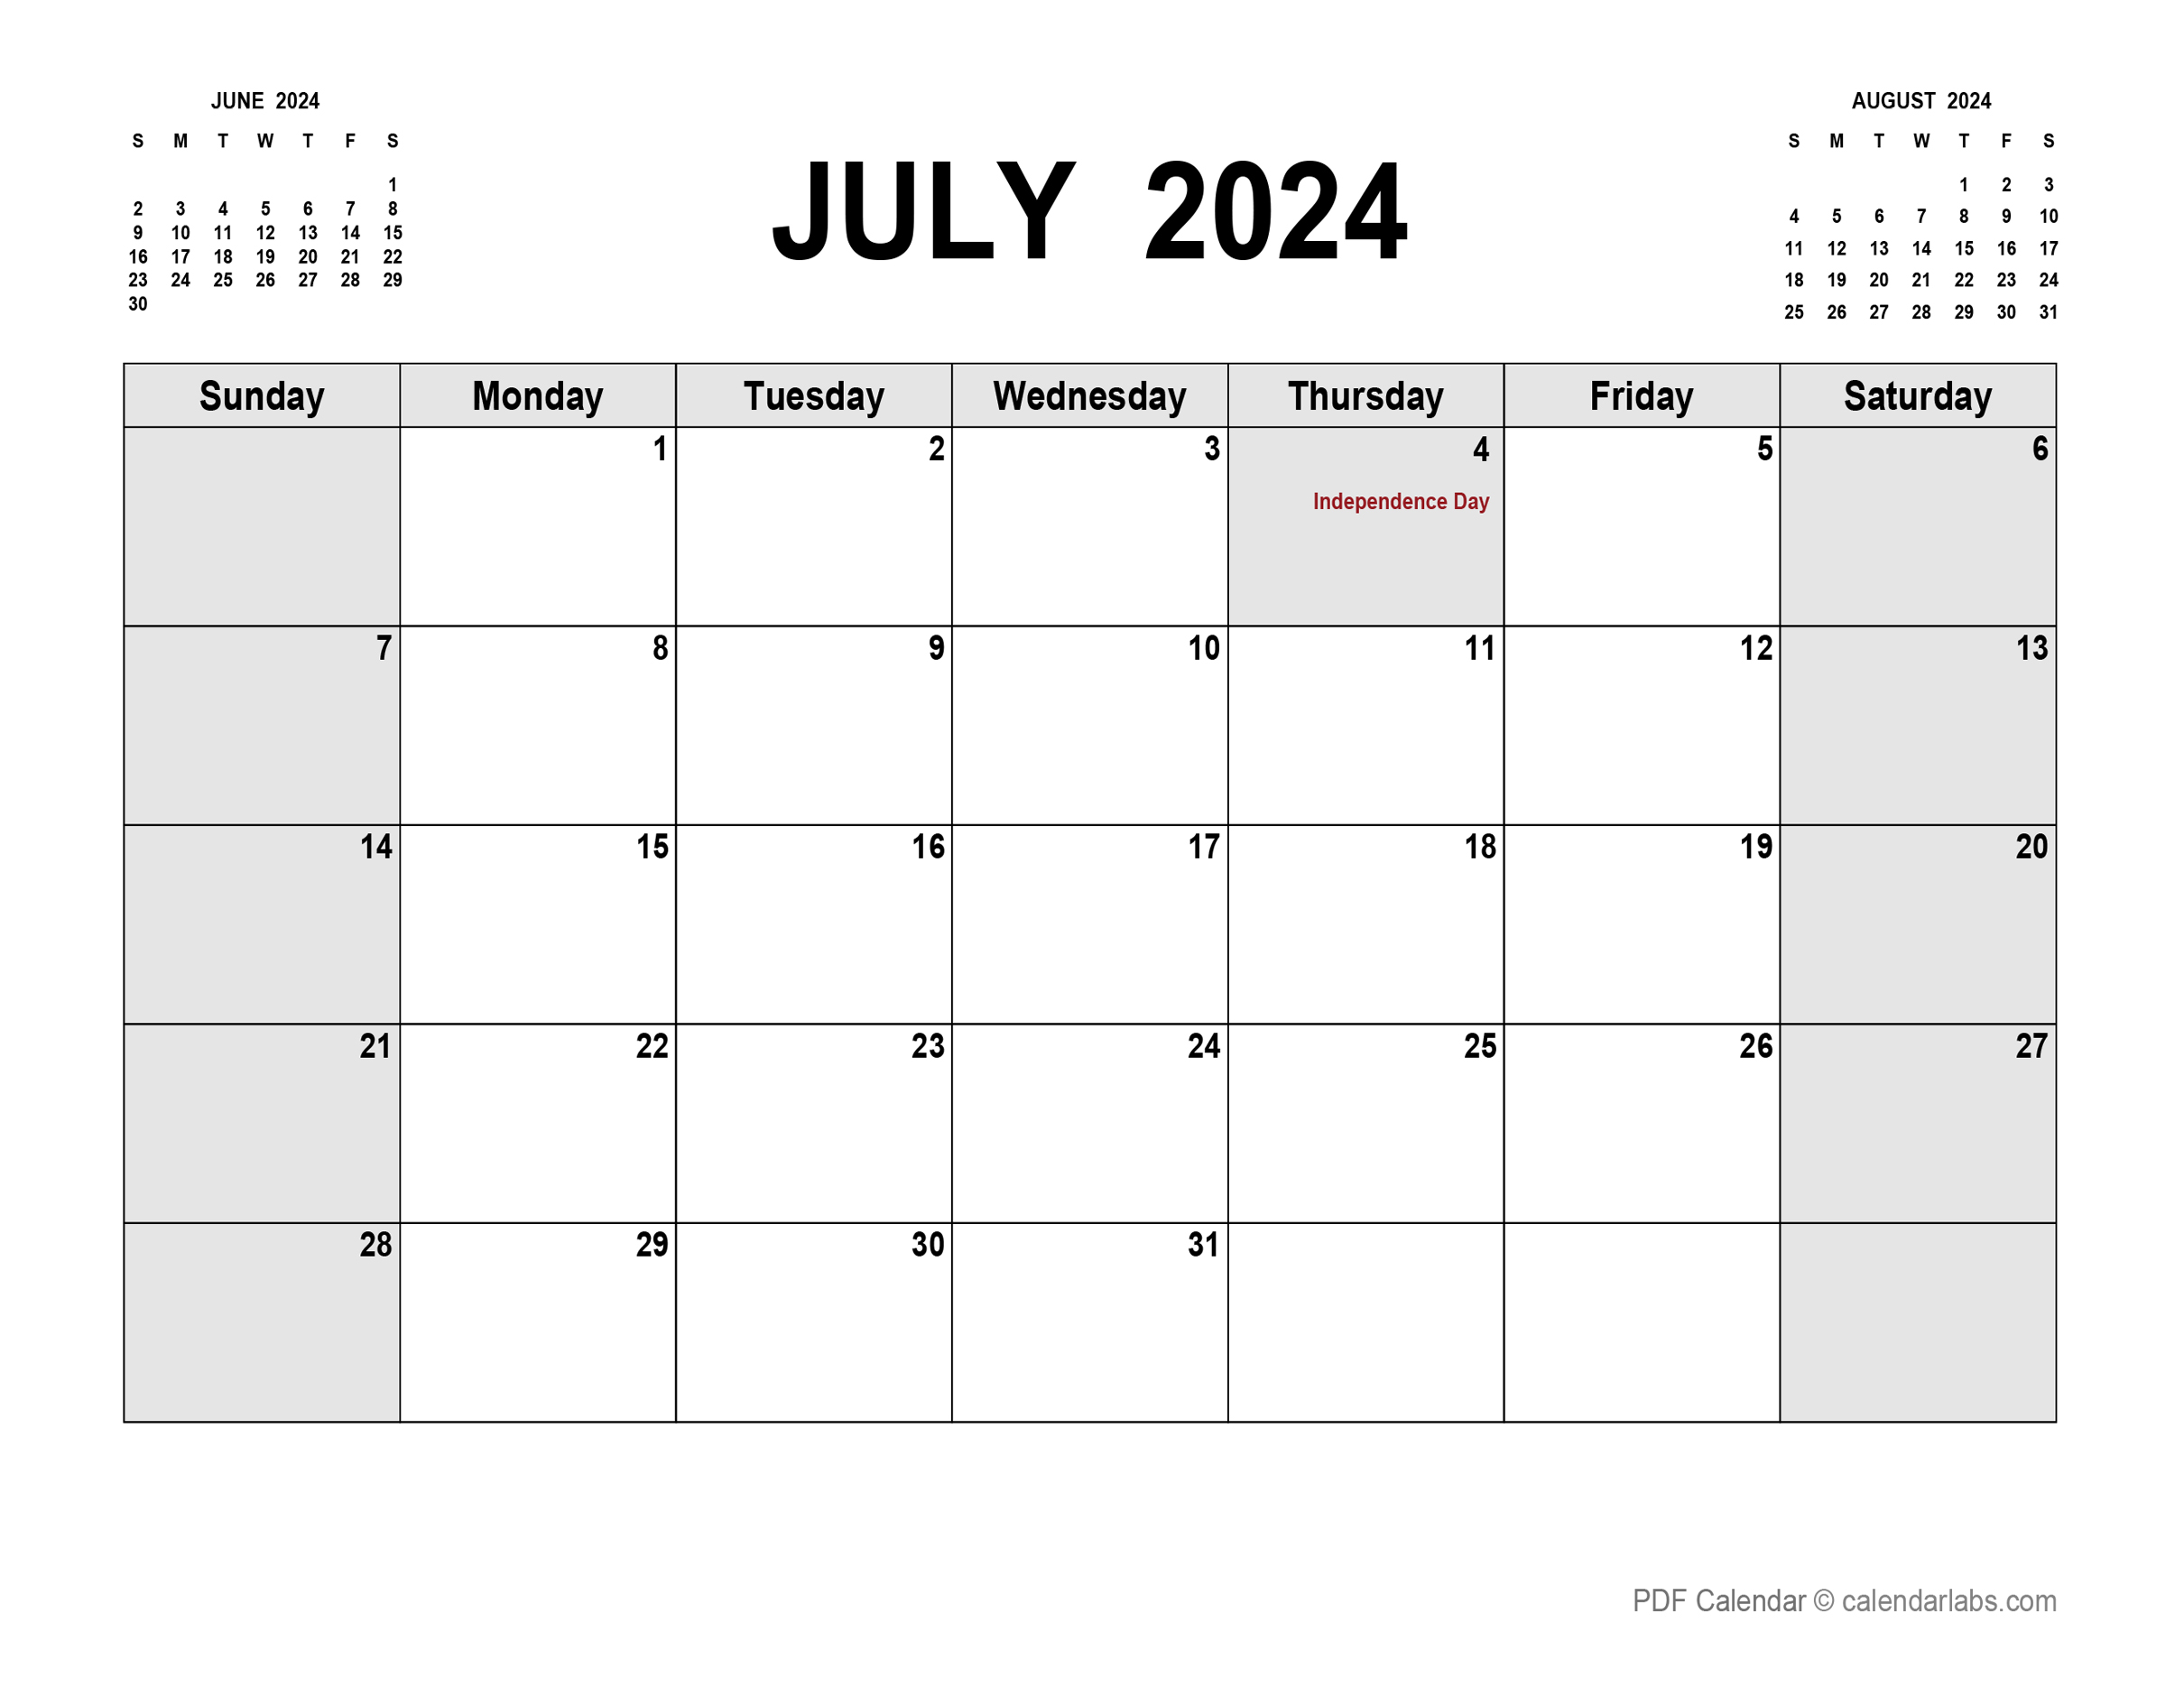 july 2023 calendars calendar options july 2023 calendar free